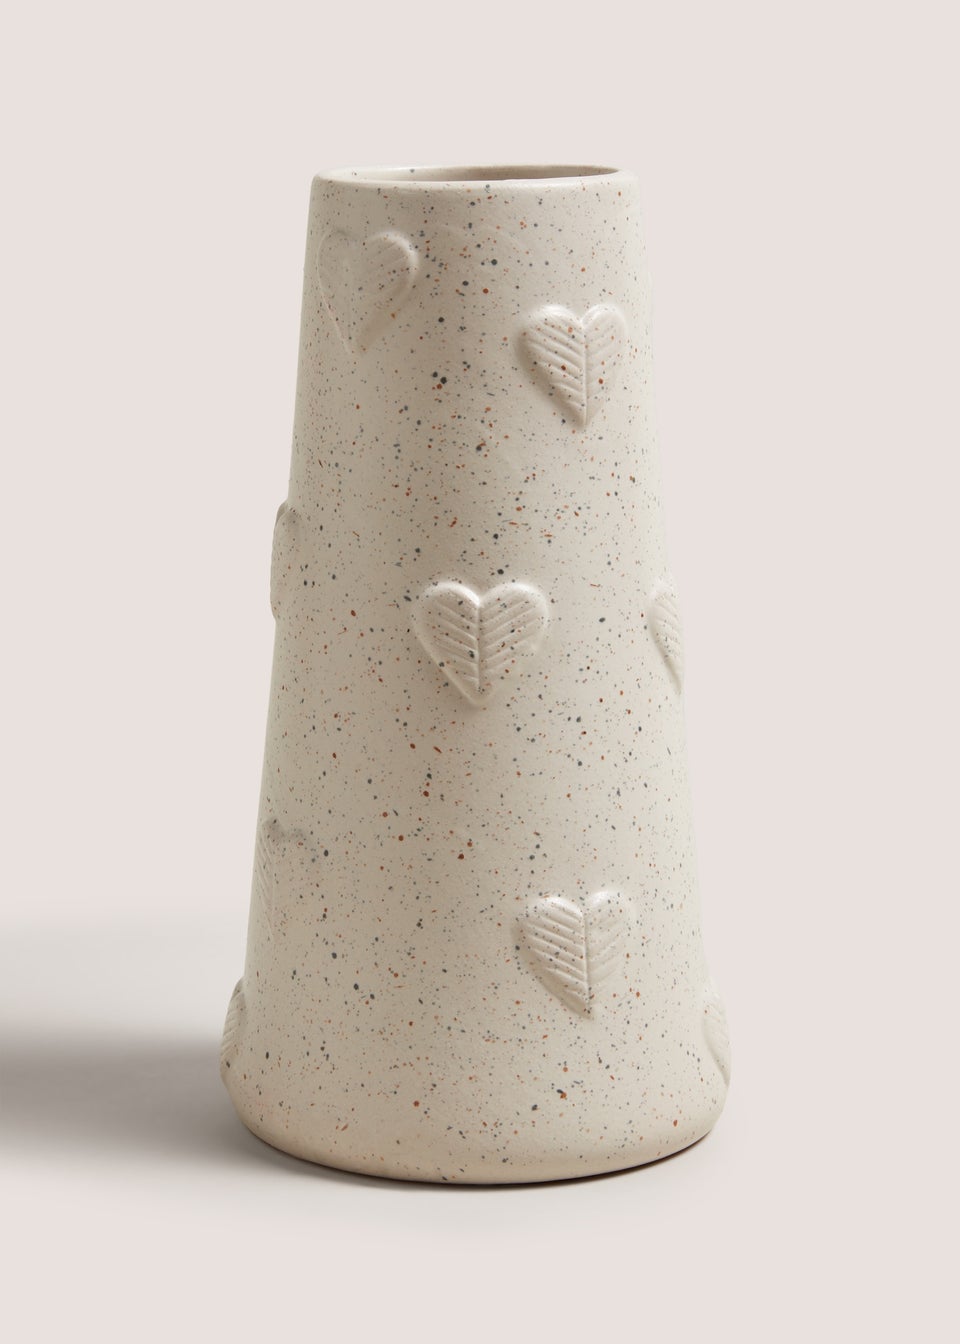 Beige Cottage Heart Embroidered Vase 
(21.5cm x11.3cm x 11.3cm)